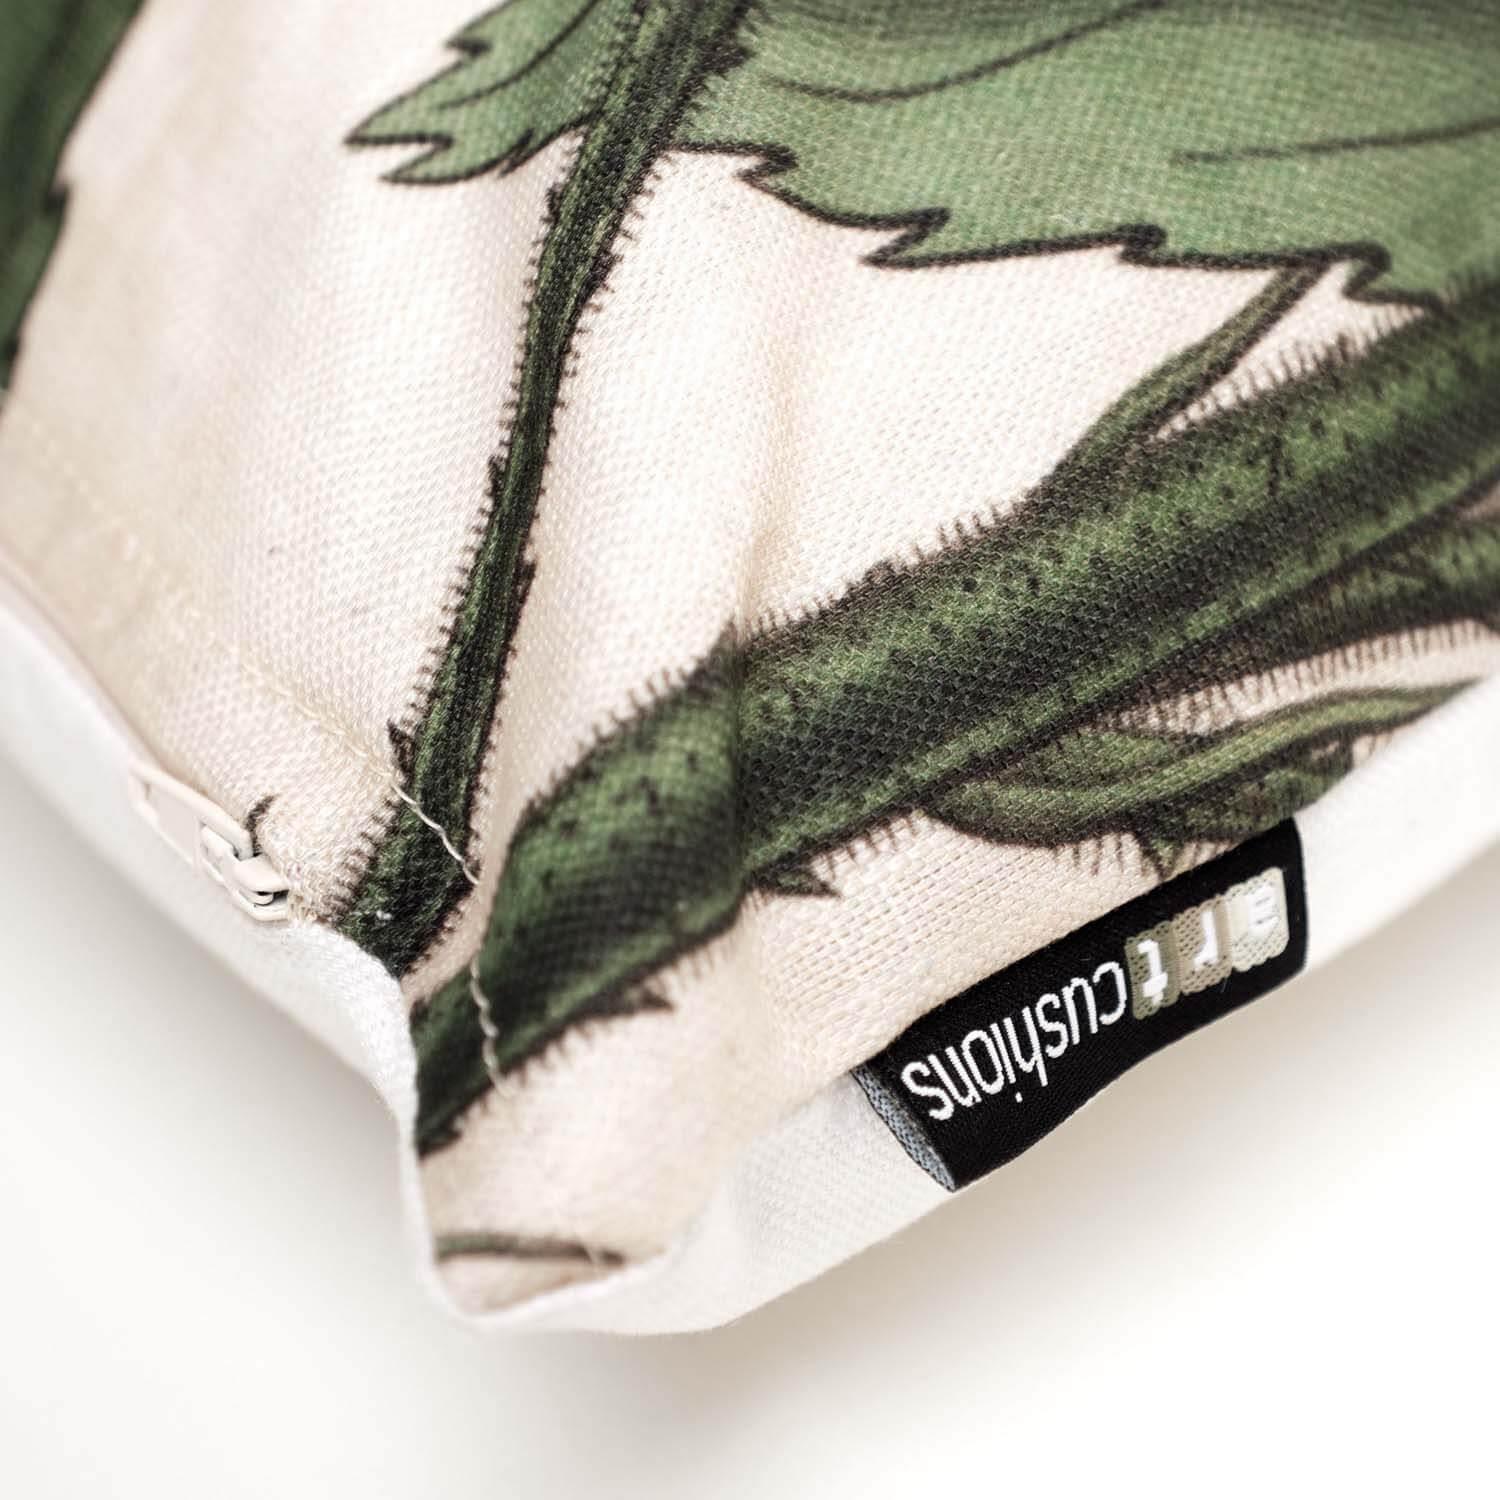 Sabre Tooth - Kali Stileman Cushion - Handmade Cushions UK - WeLoveCushions